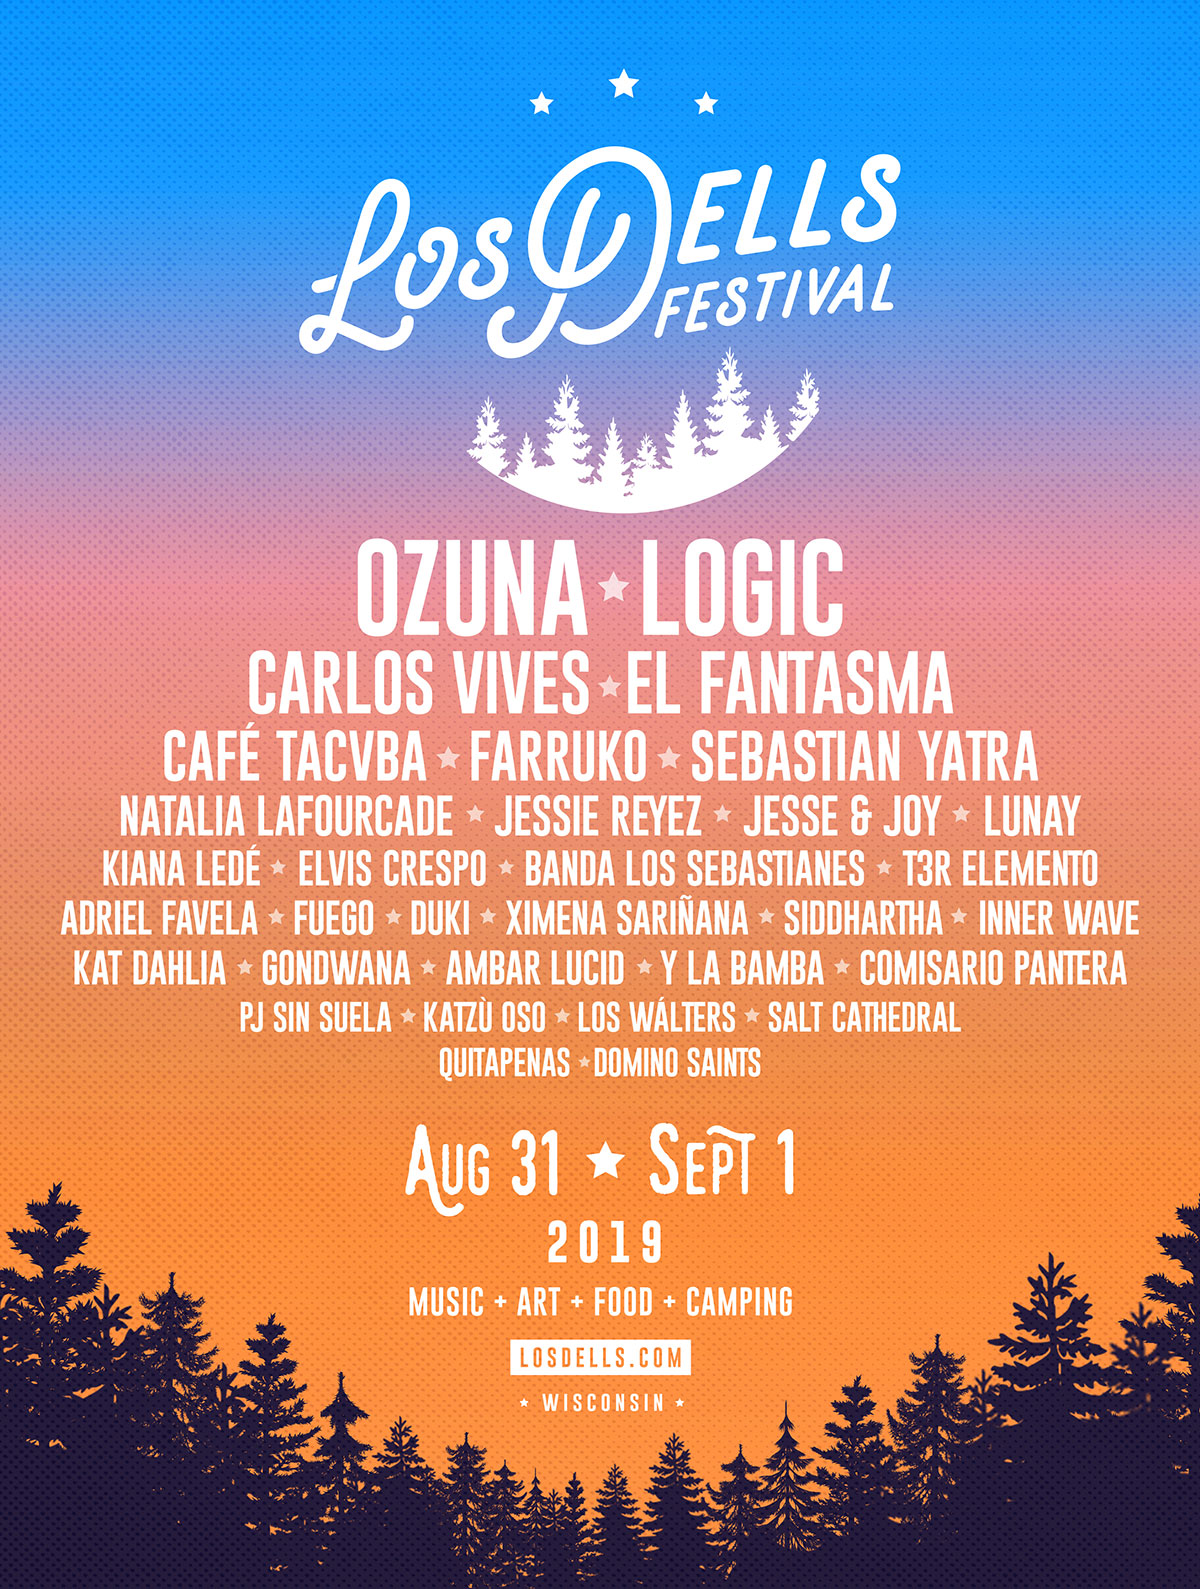 Logic And Ozuna To Headline Los Dells Fest 2019 — Also On The Lineup El Fantasma, Farruko, Banda Los Sebastianes and More